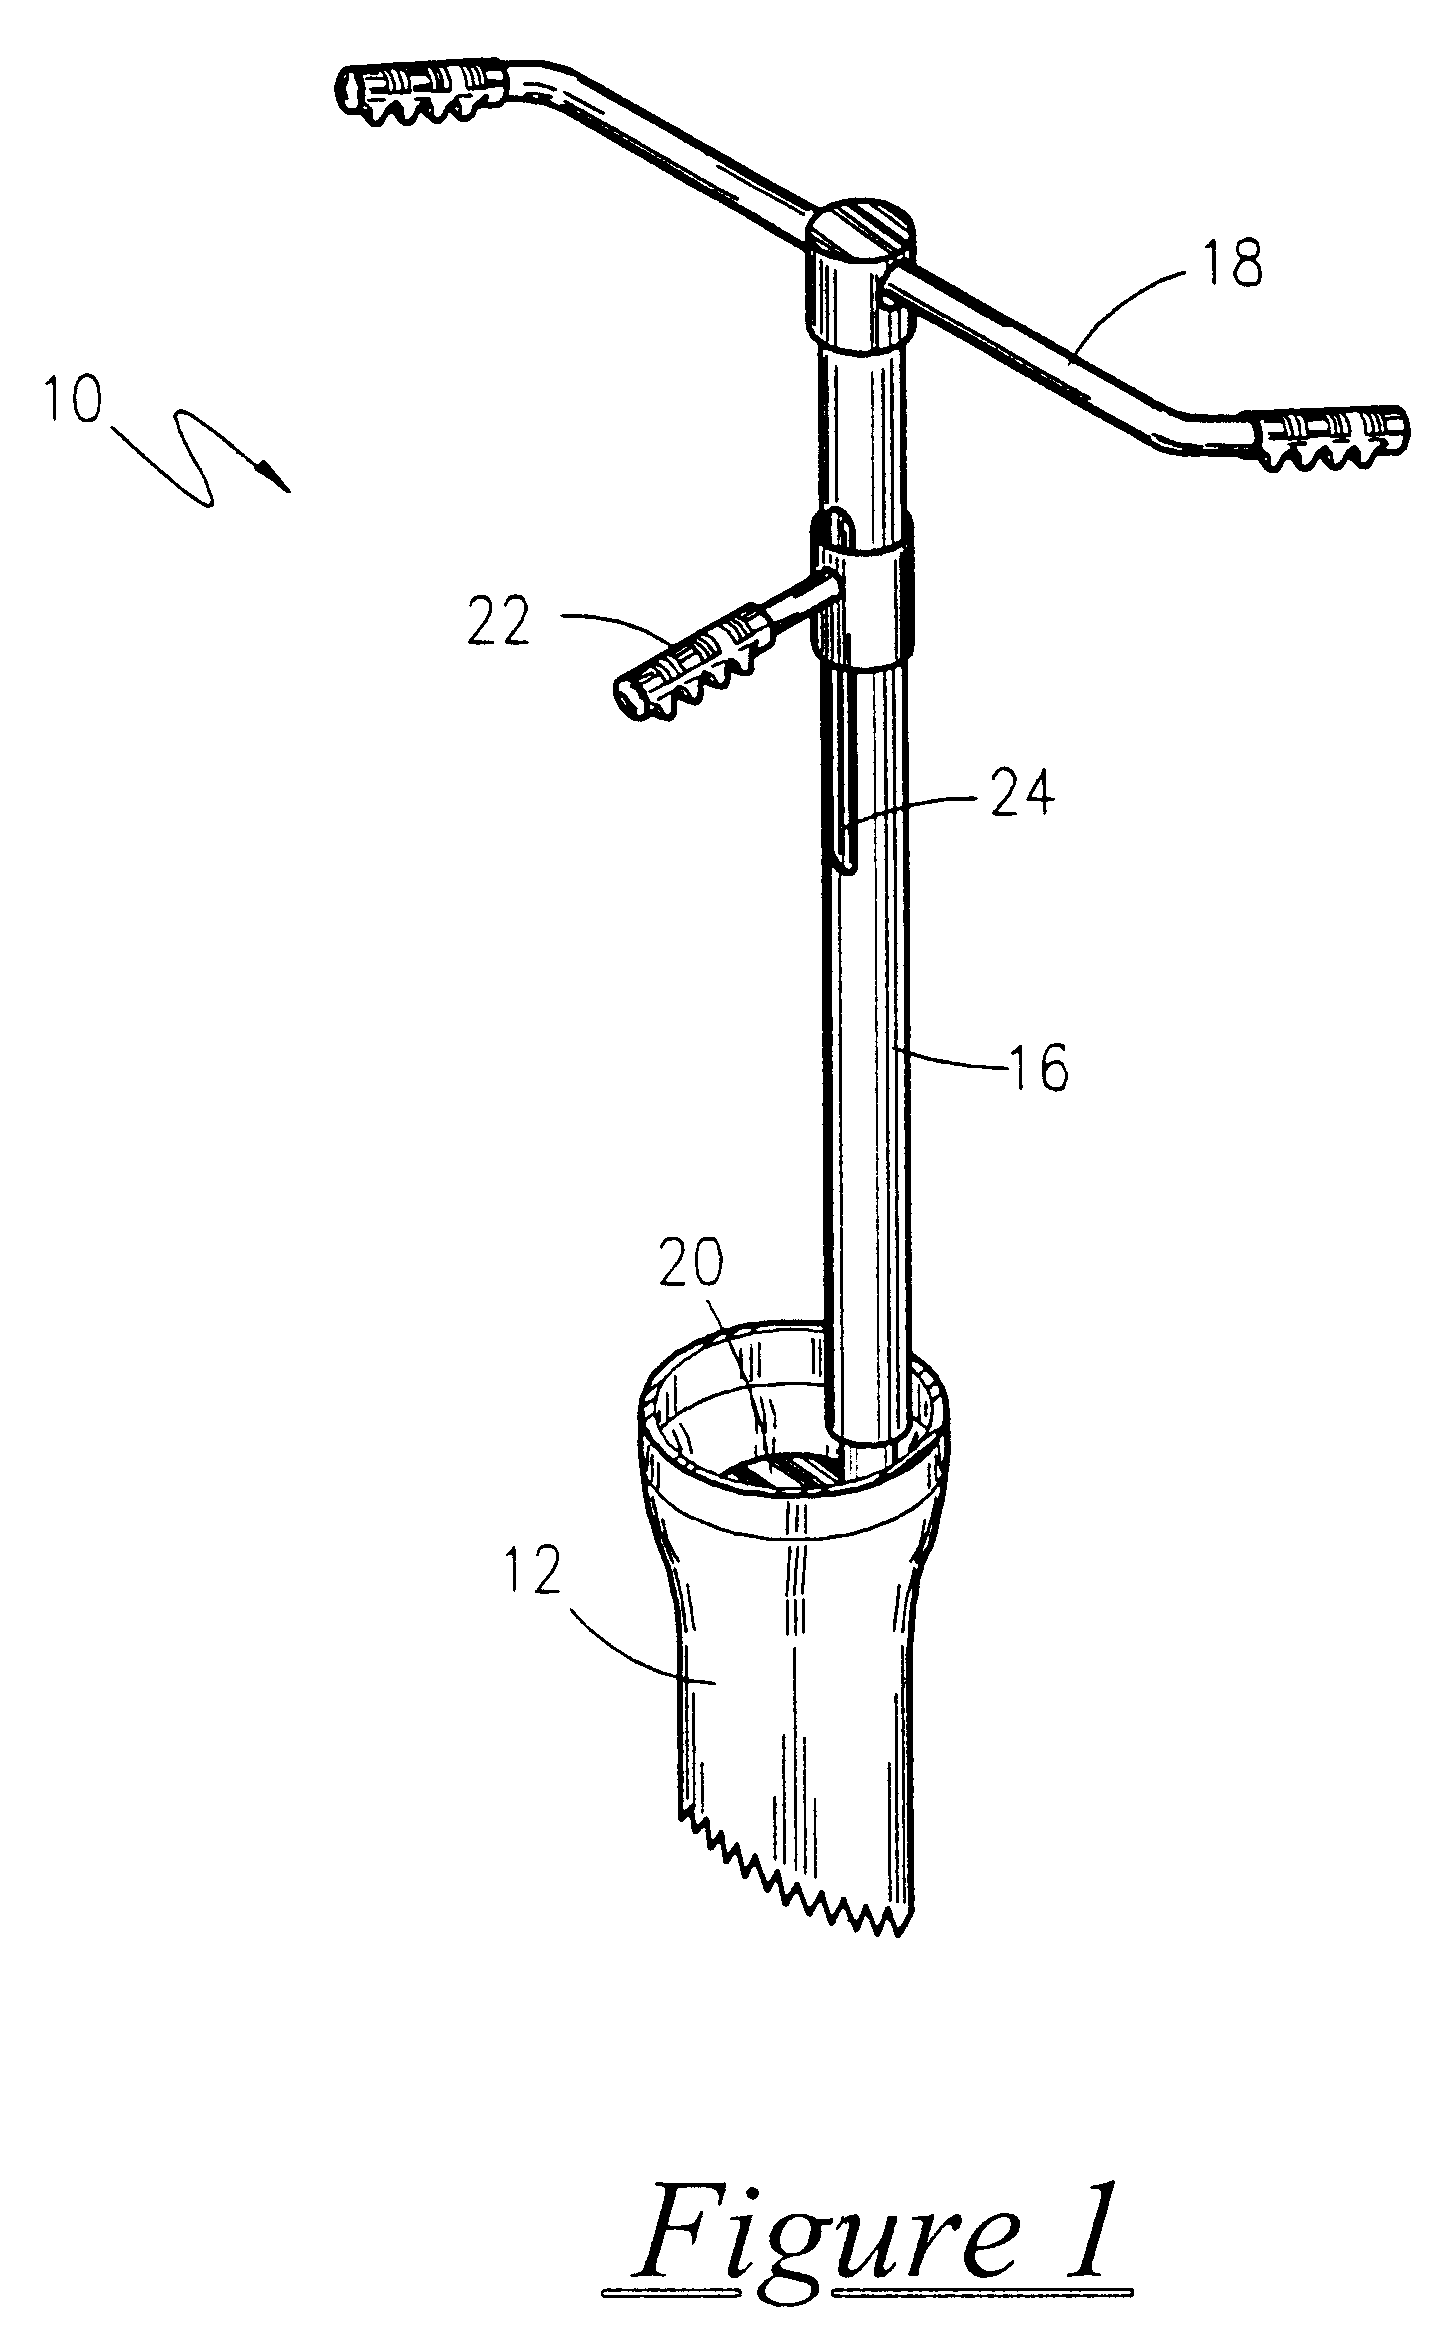 Manually manipulated rotatable digging blade